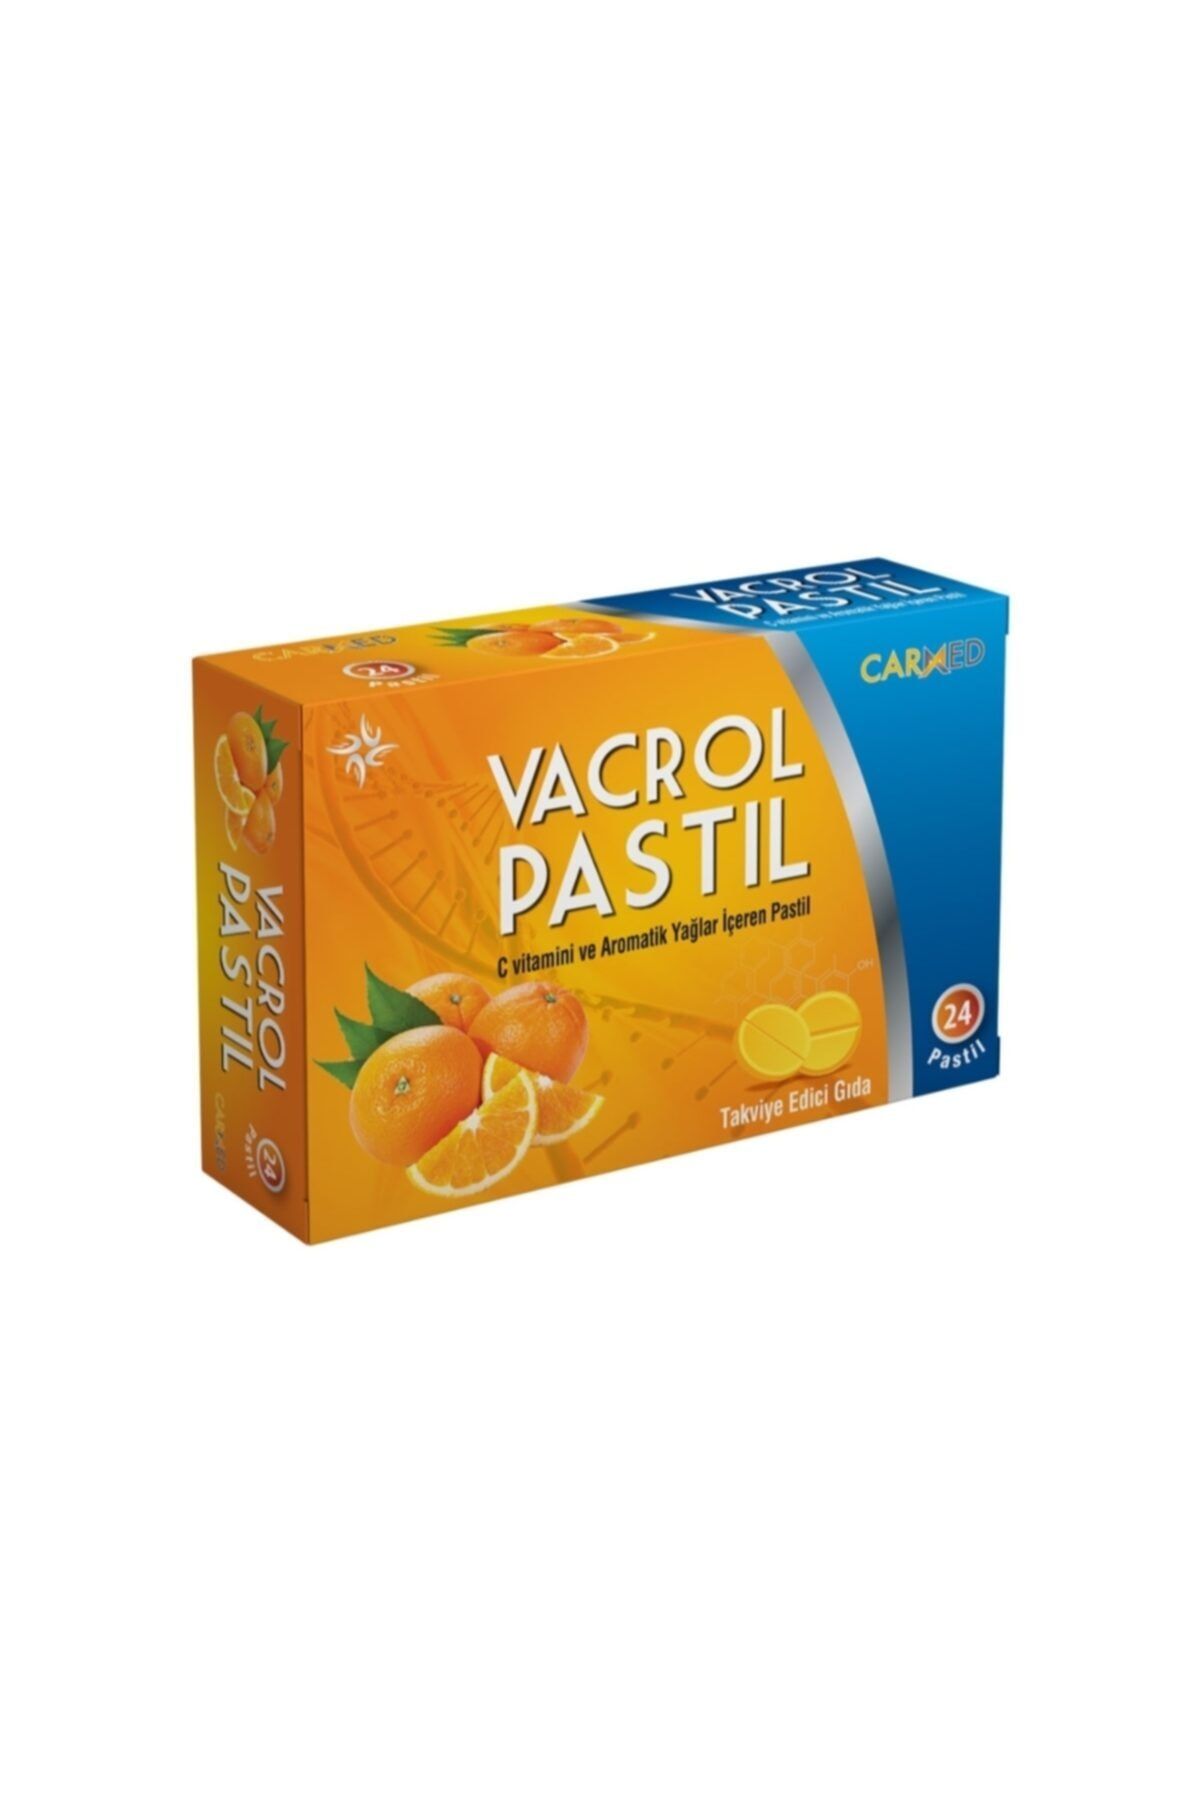 Vacrol Pastil